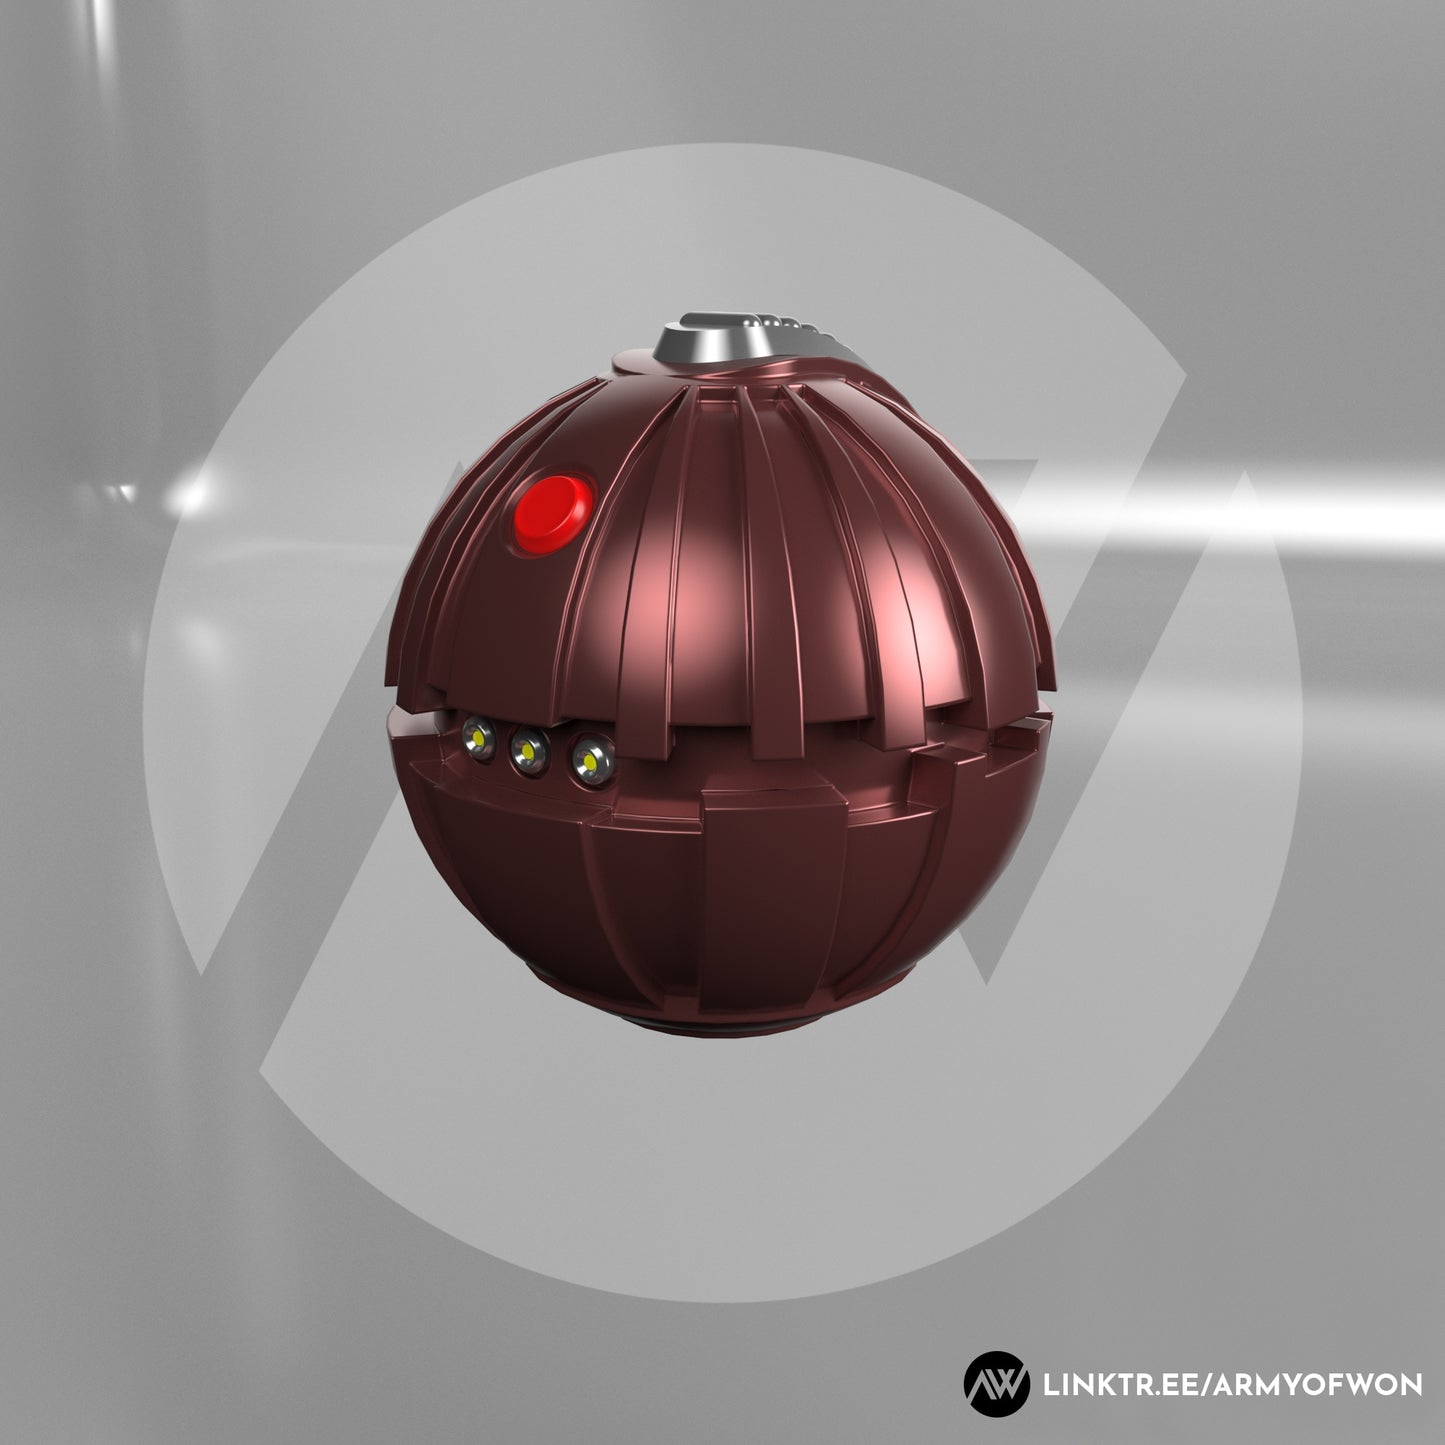 Star Wars inspired Thermal Detonator - STL only for personal print